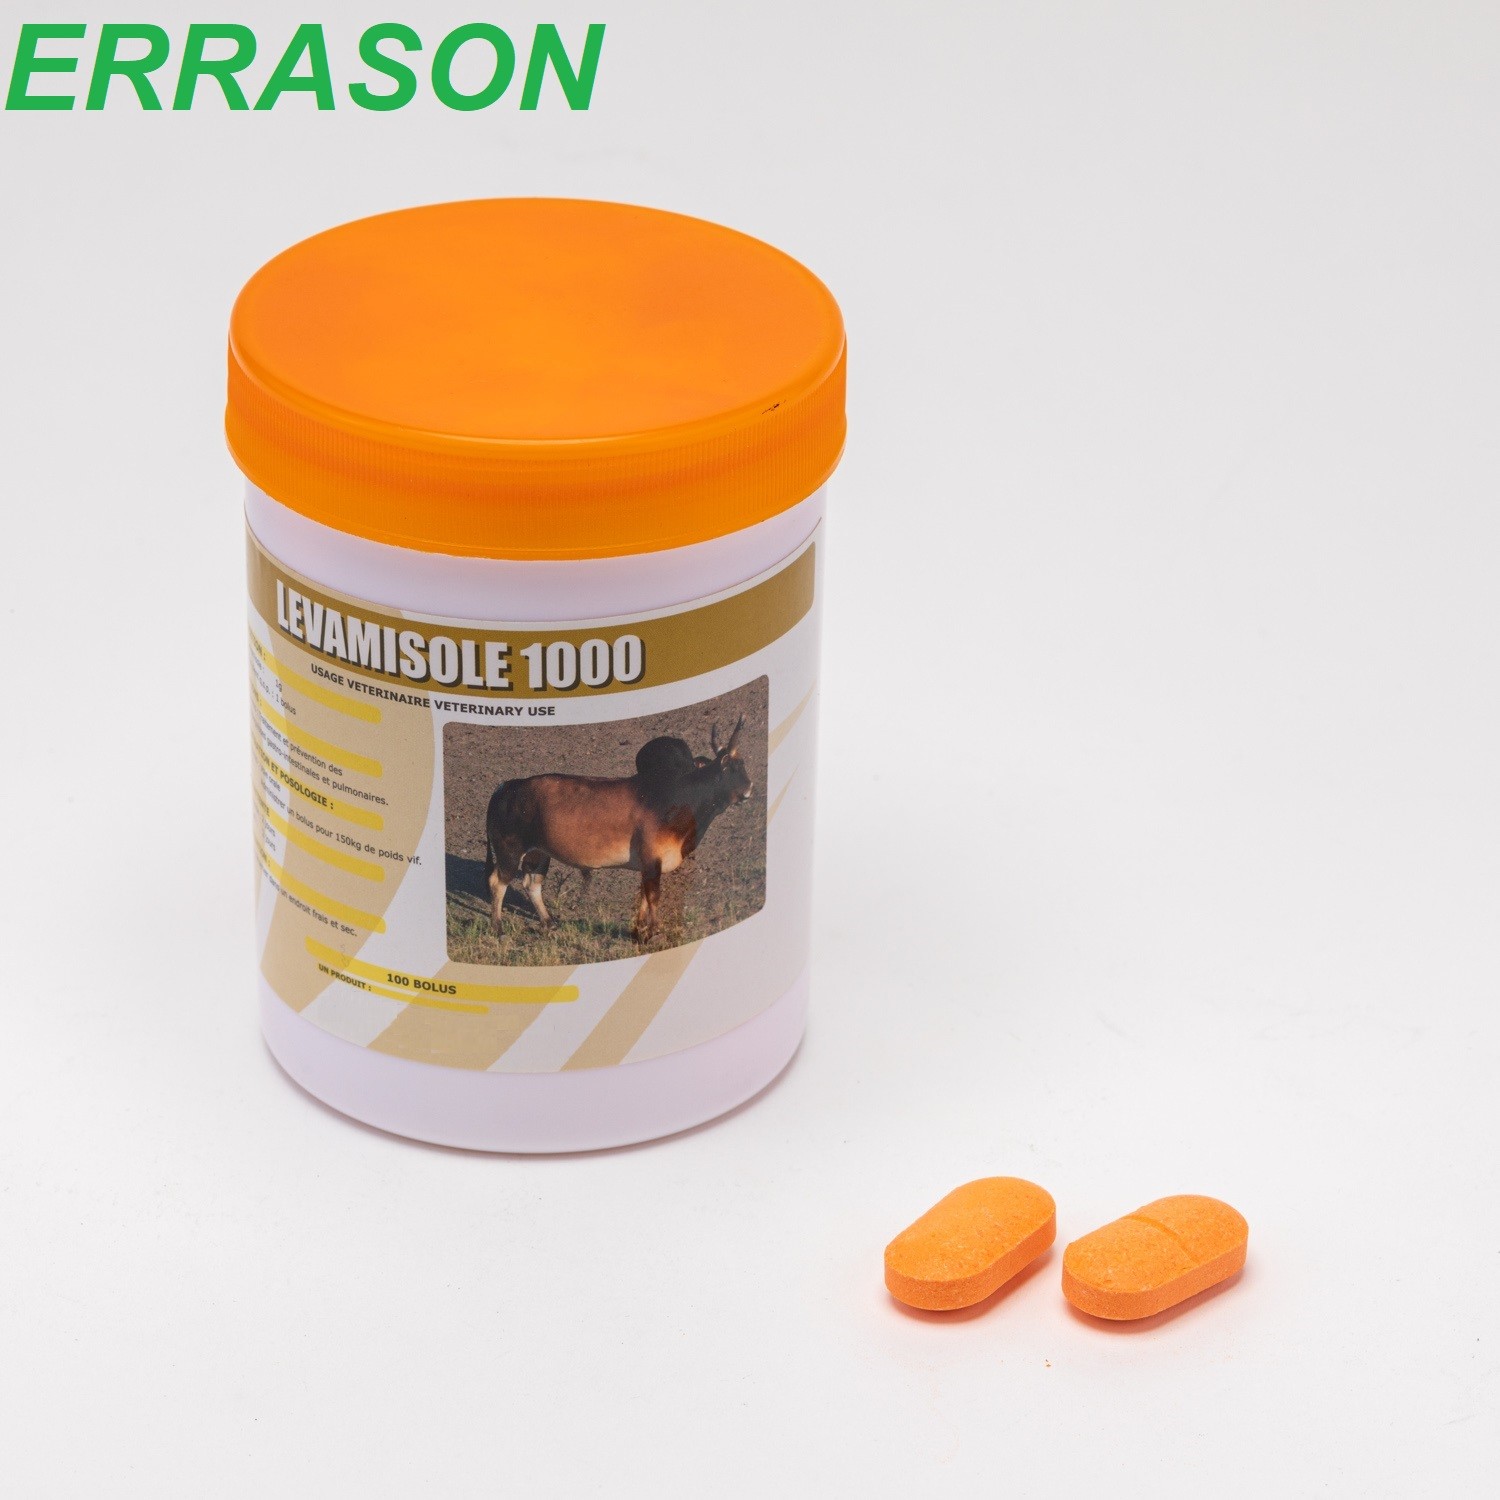 Levamisole tablet orange